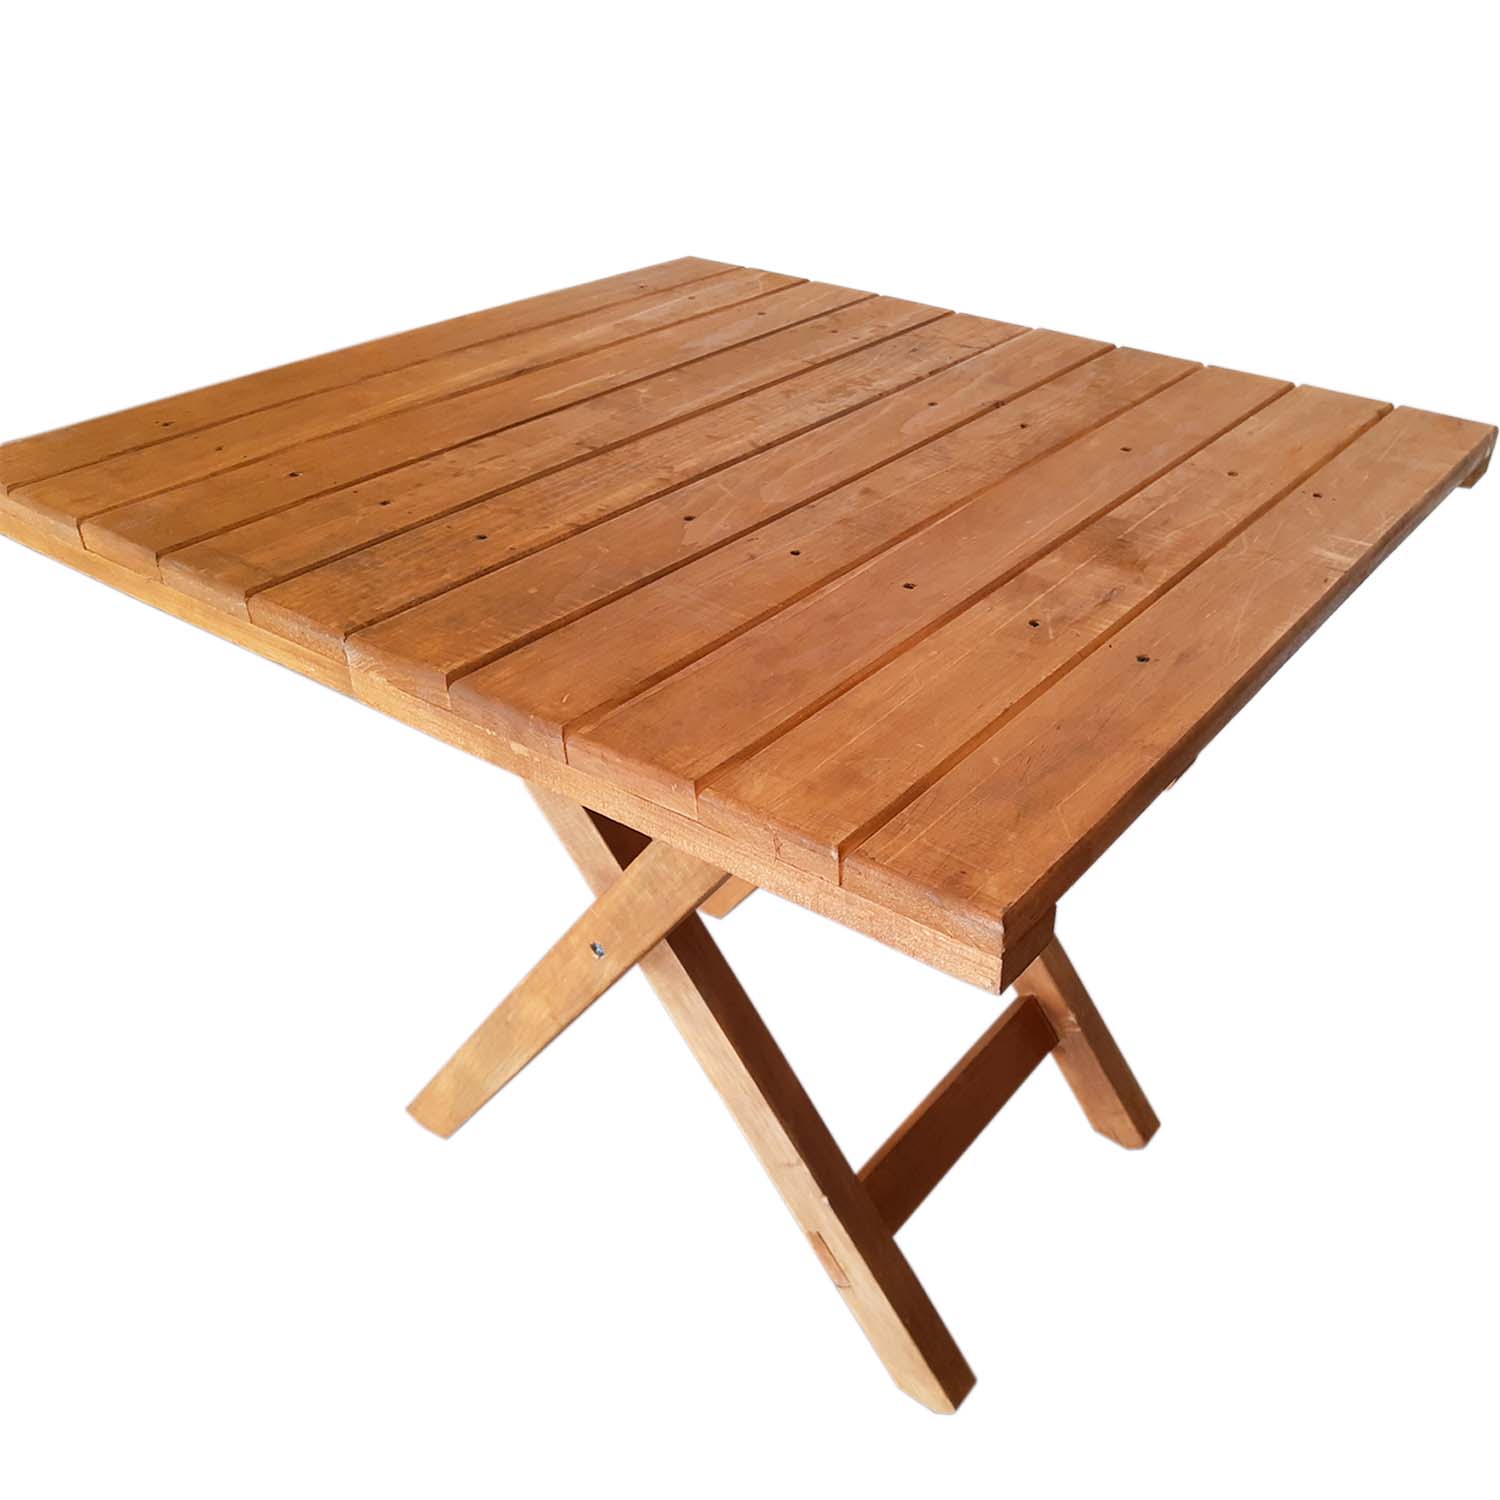 Saga mesa infantil cuadrada de madera